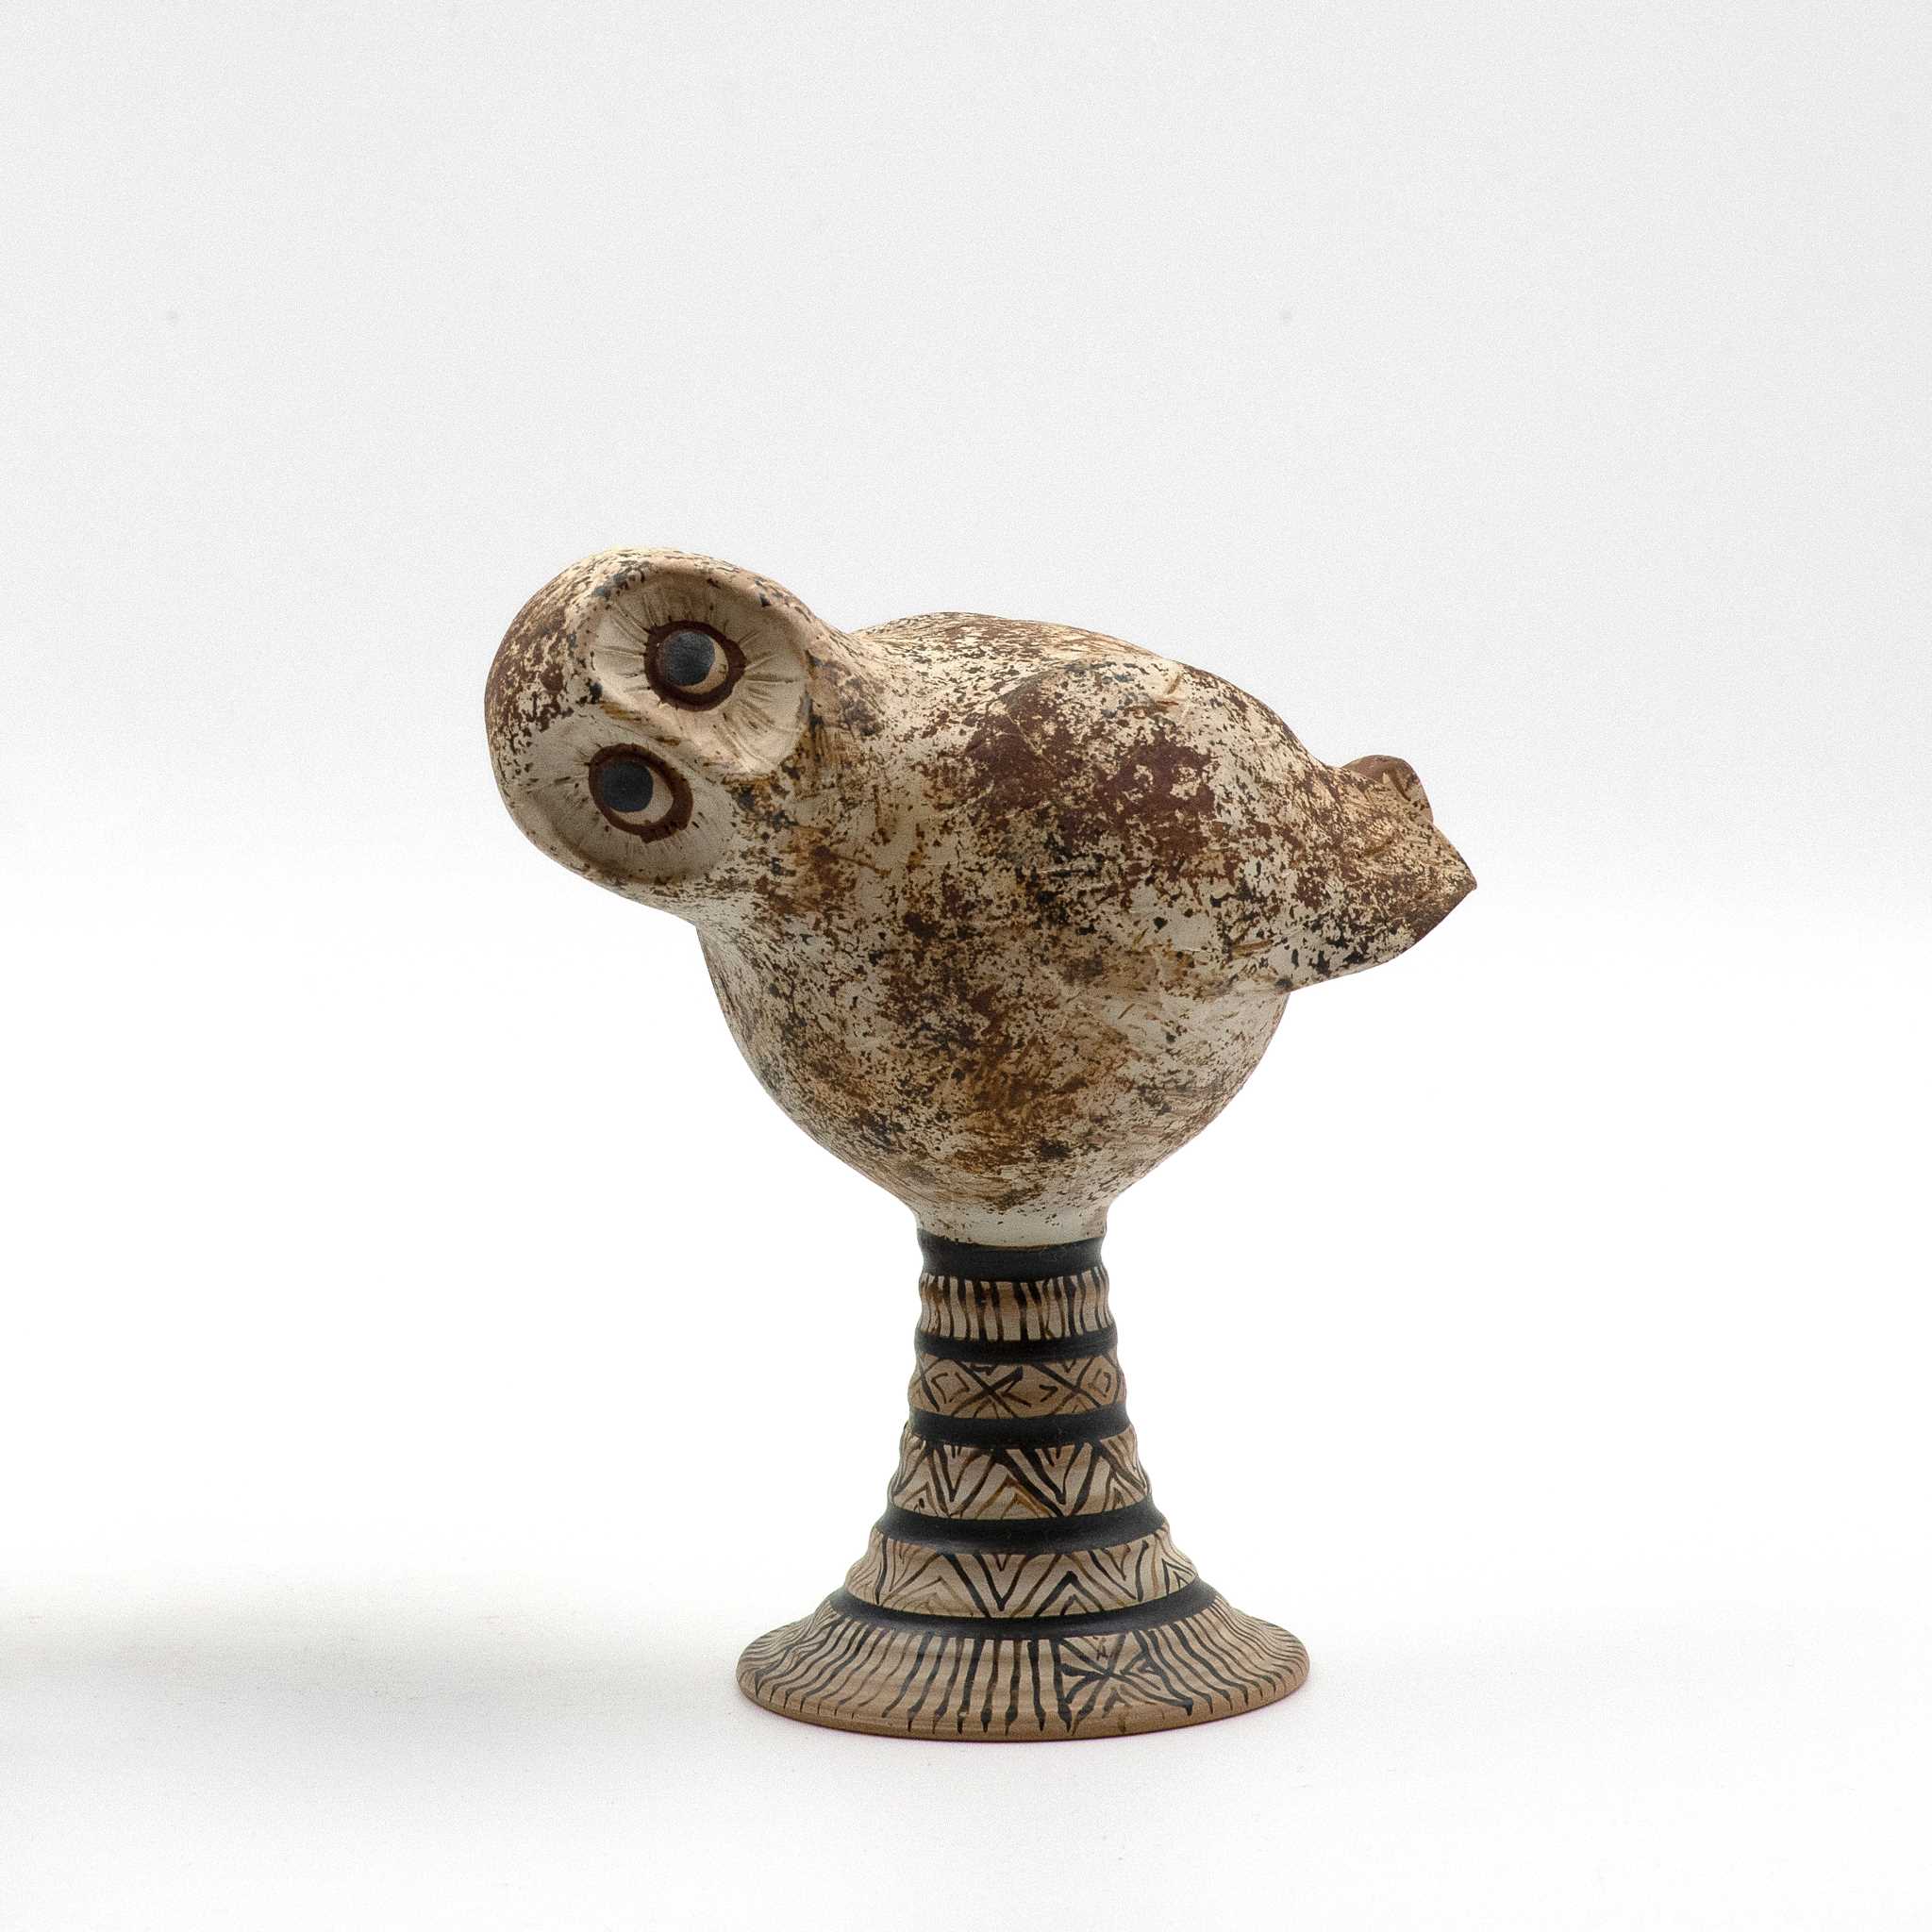 Athene Noctua - Little Owl whistle